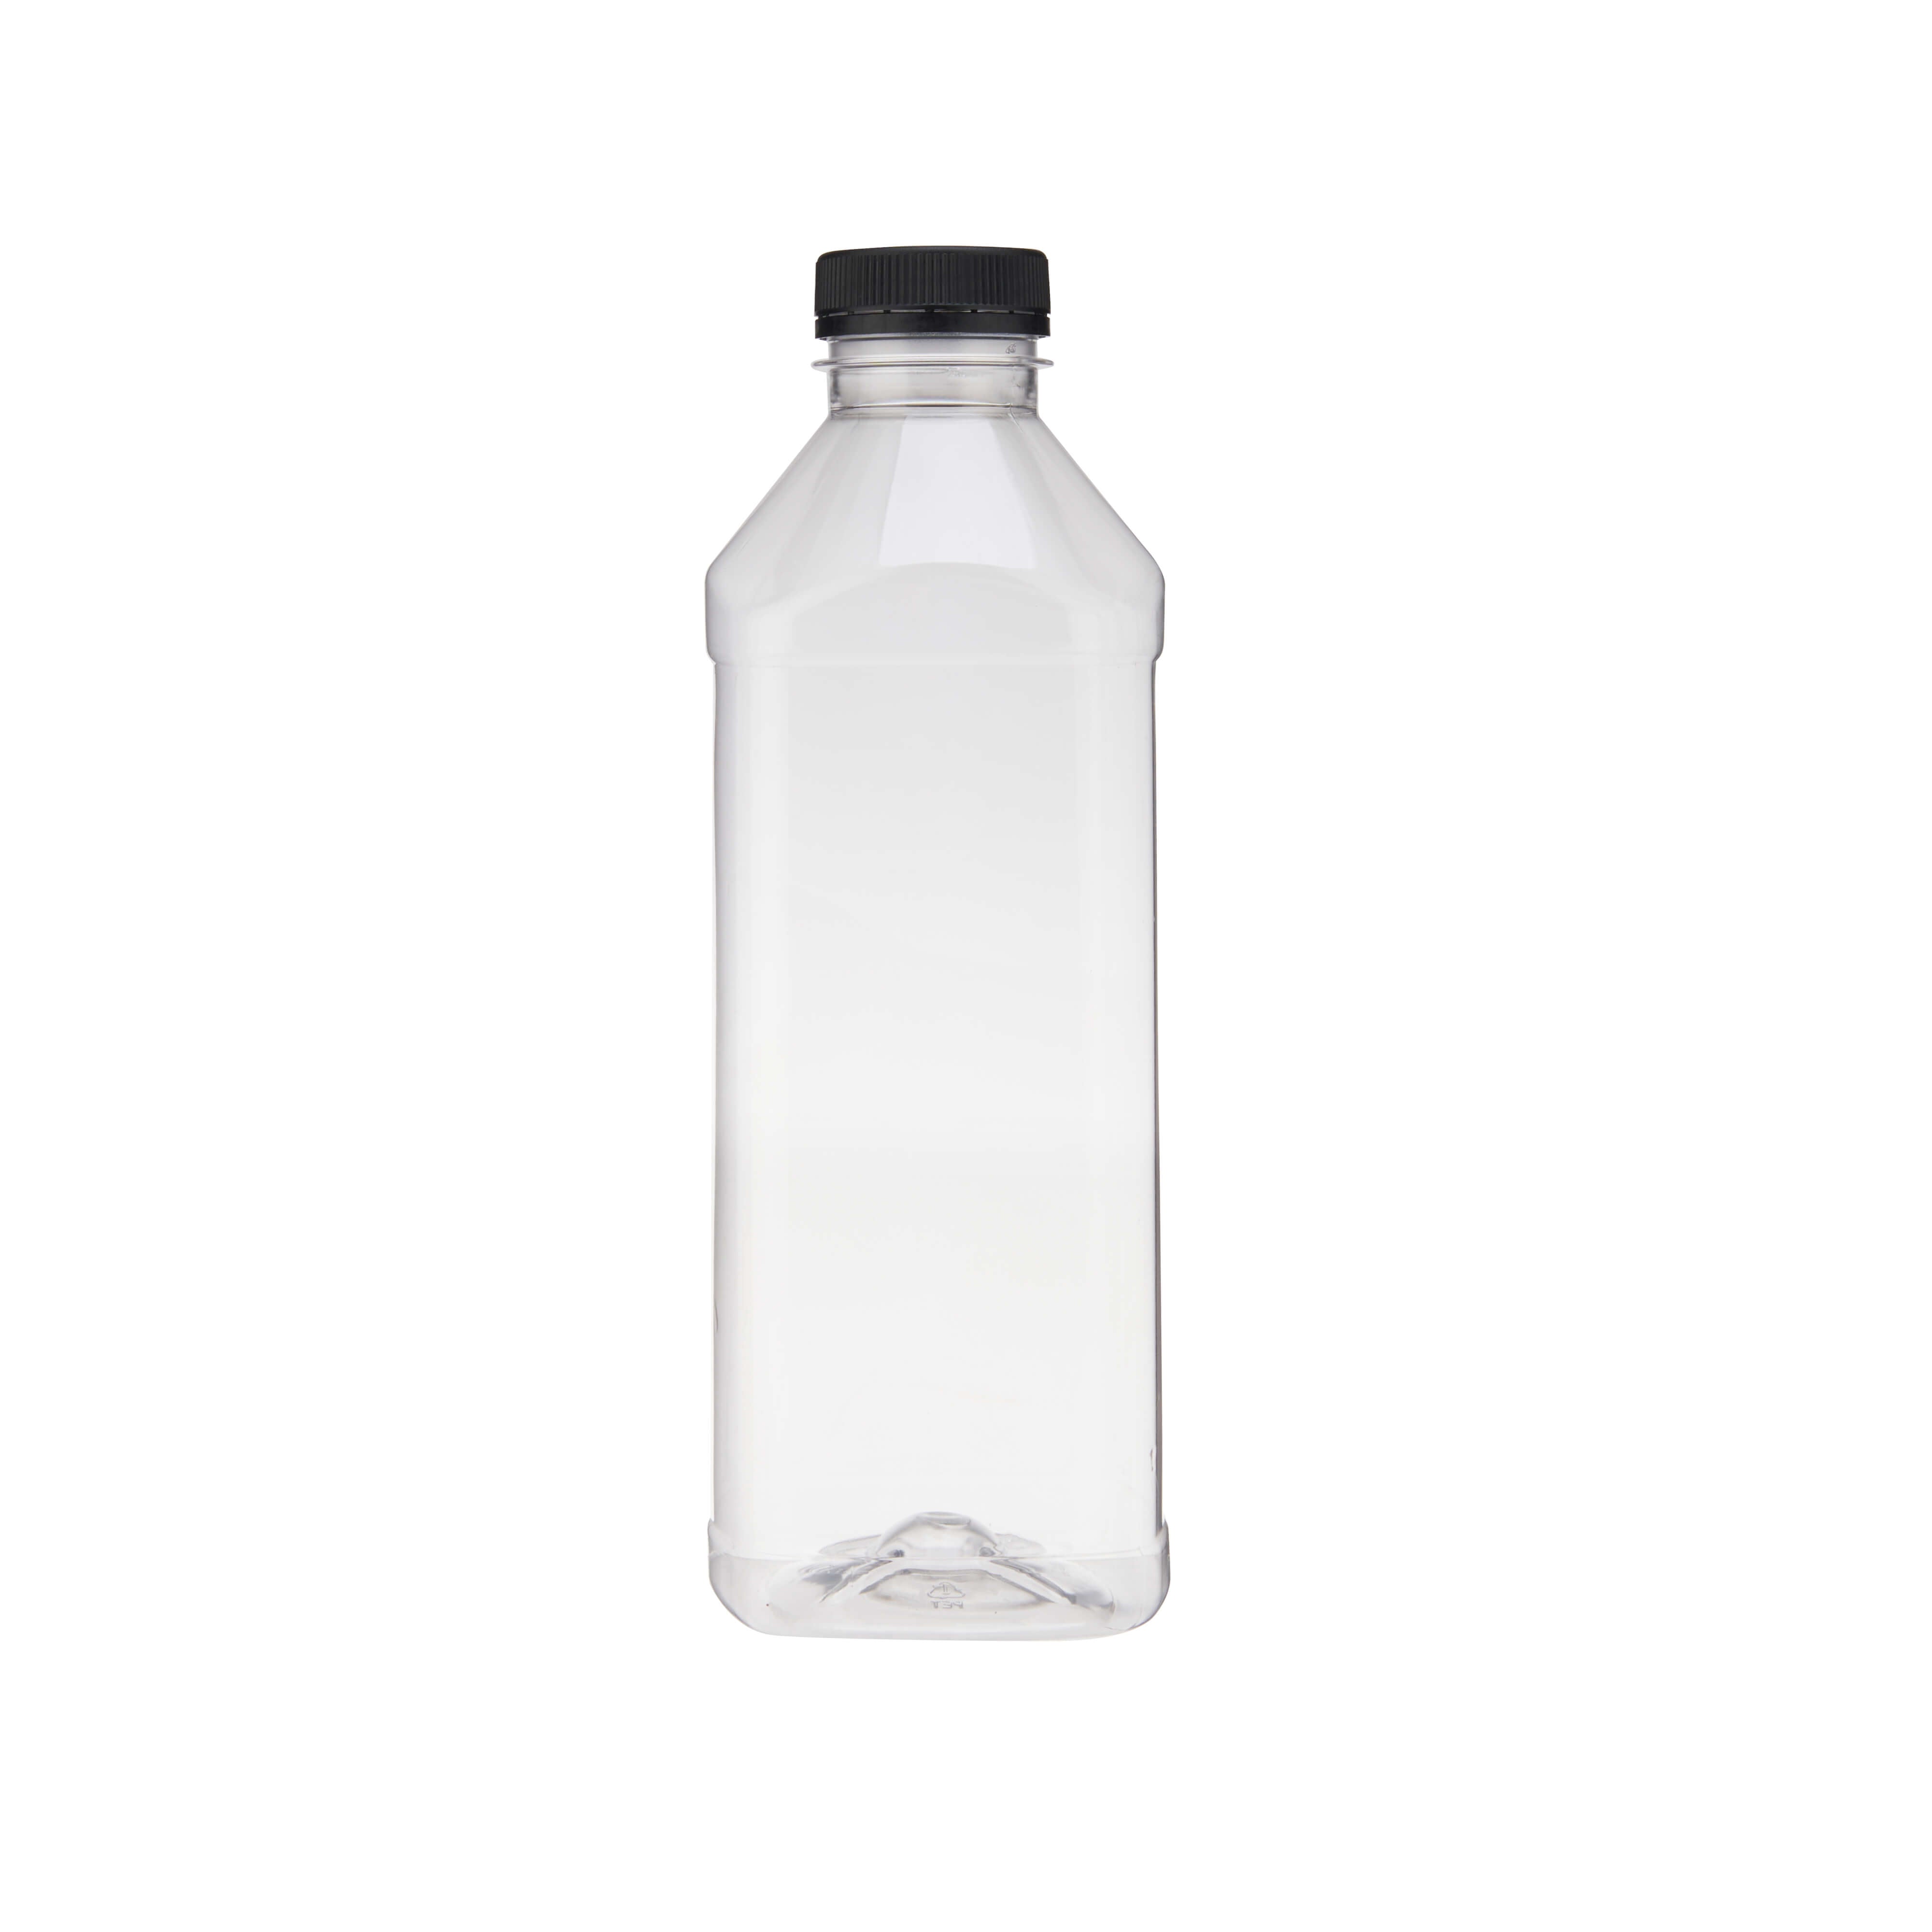 Plastic Square Bottle with Black Cap 1000ml / 1 Litre - Hotpack Global